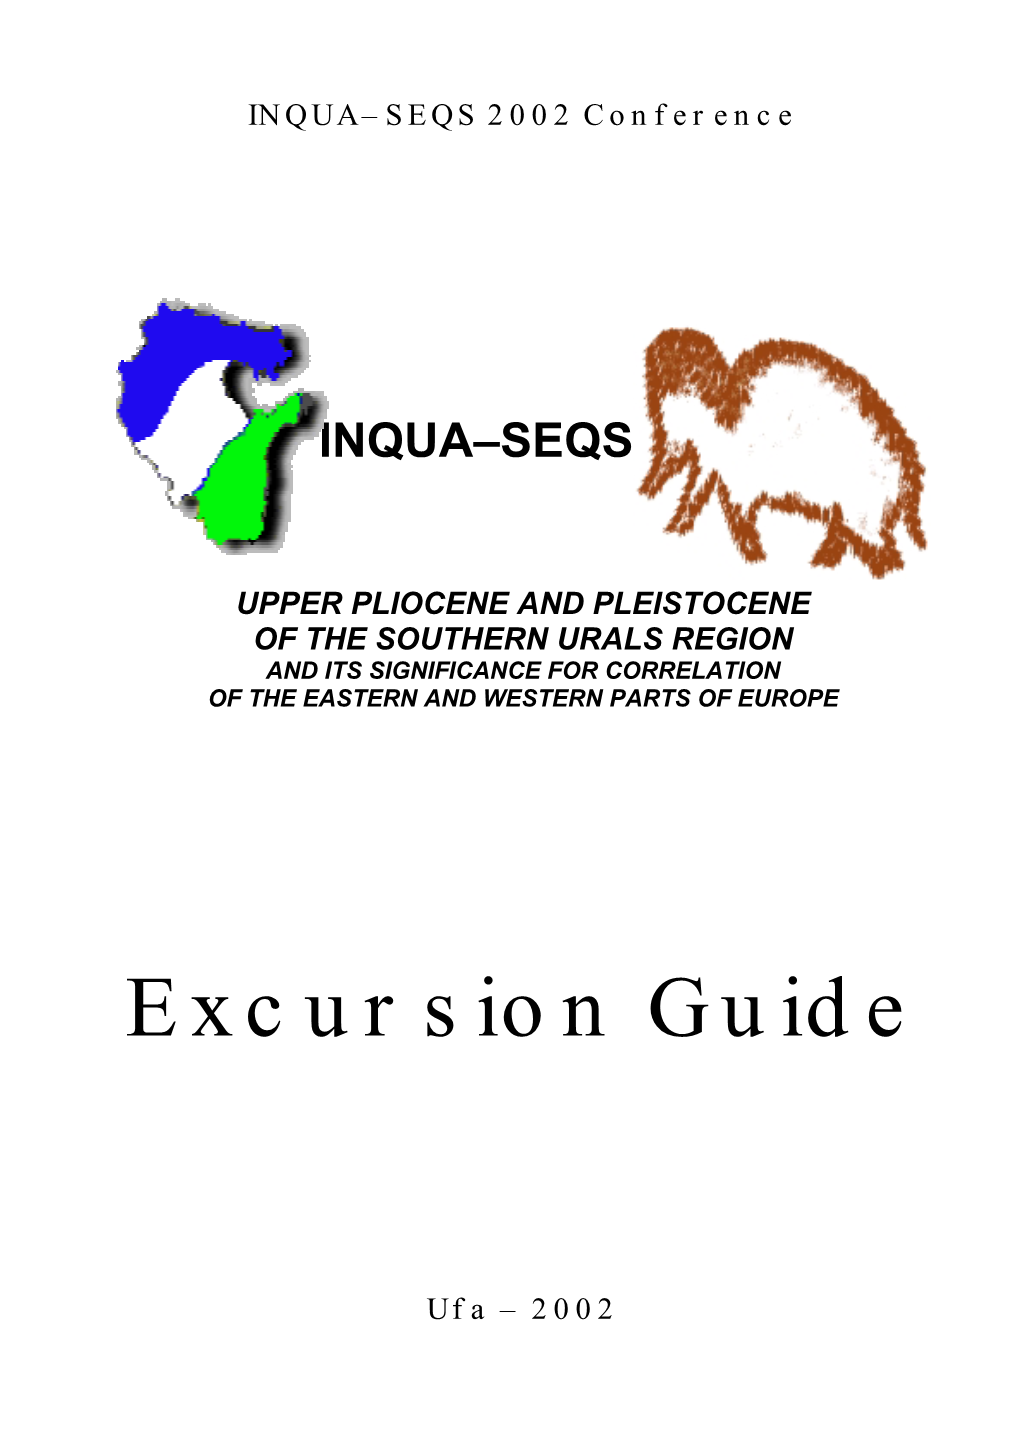 Excursion Guide